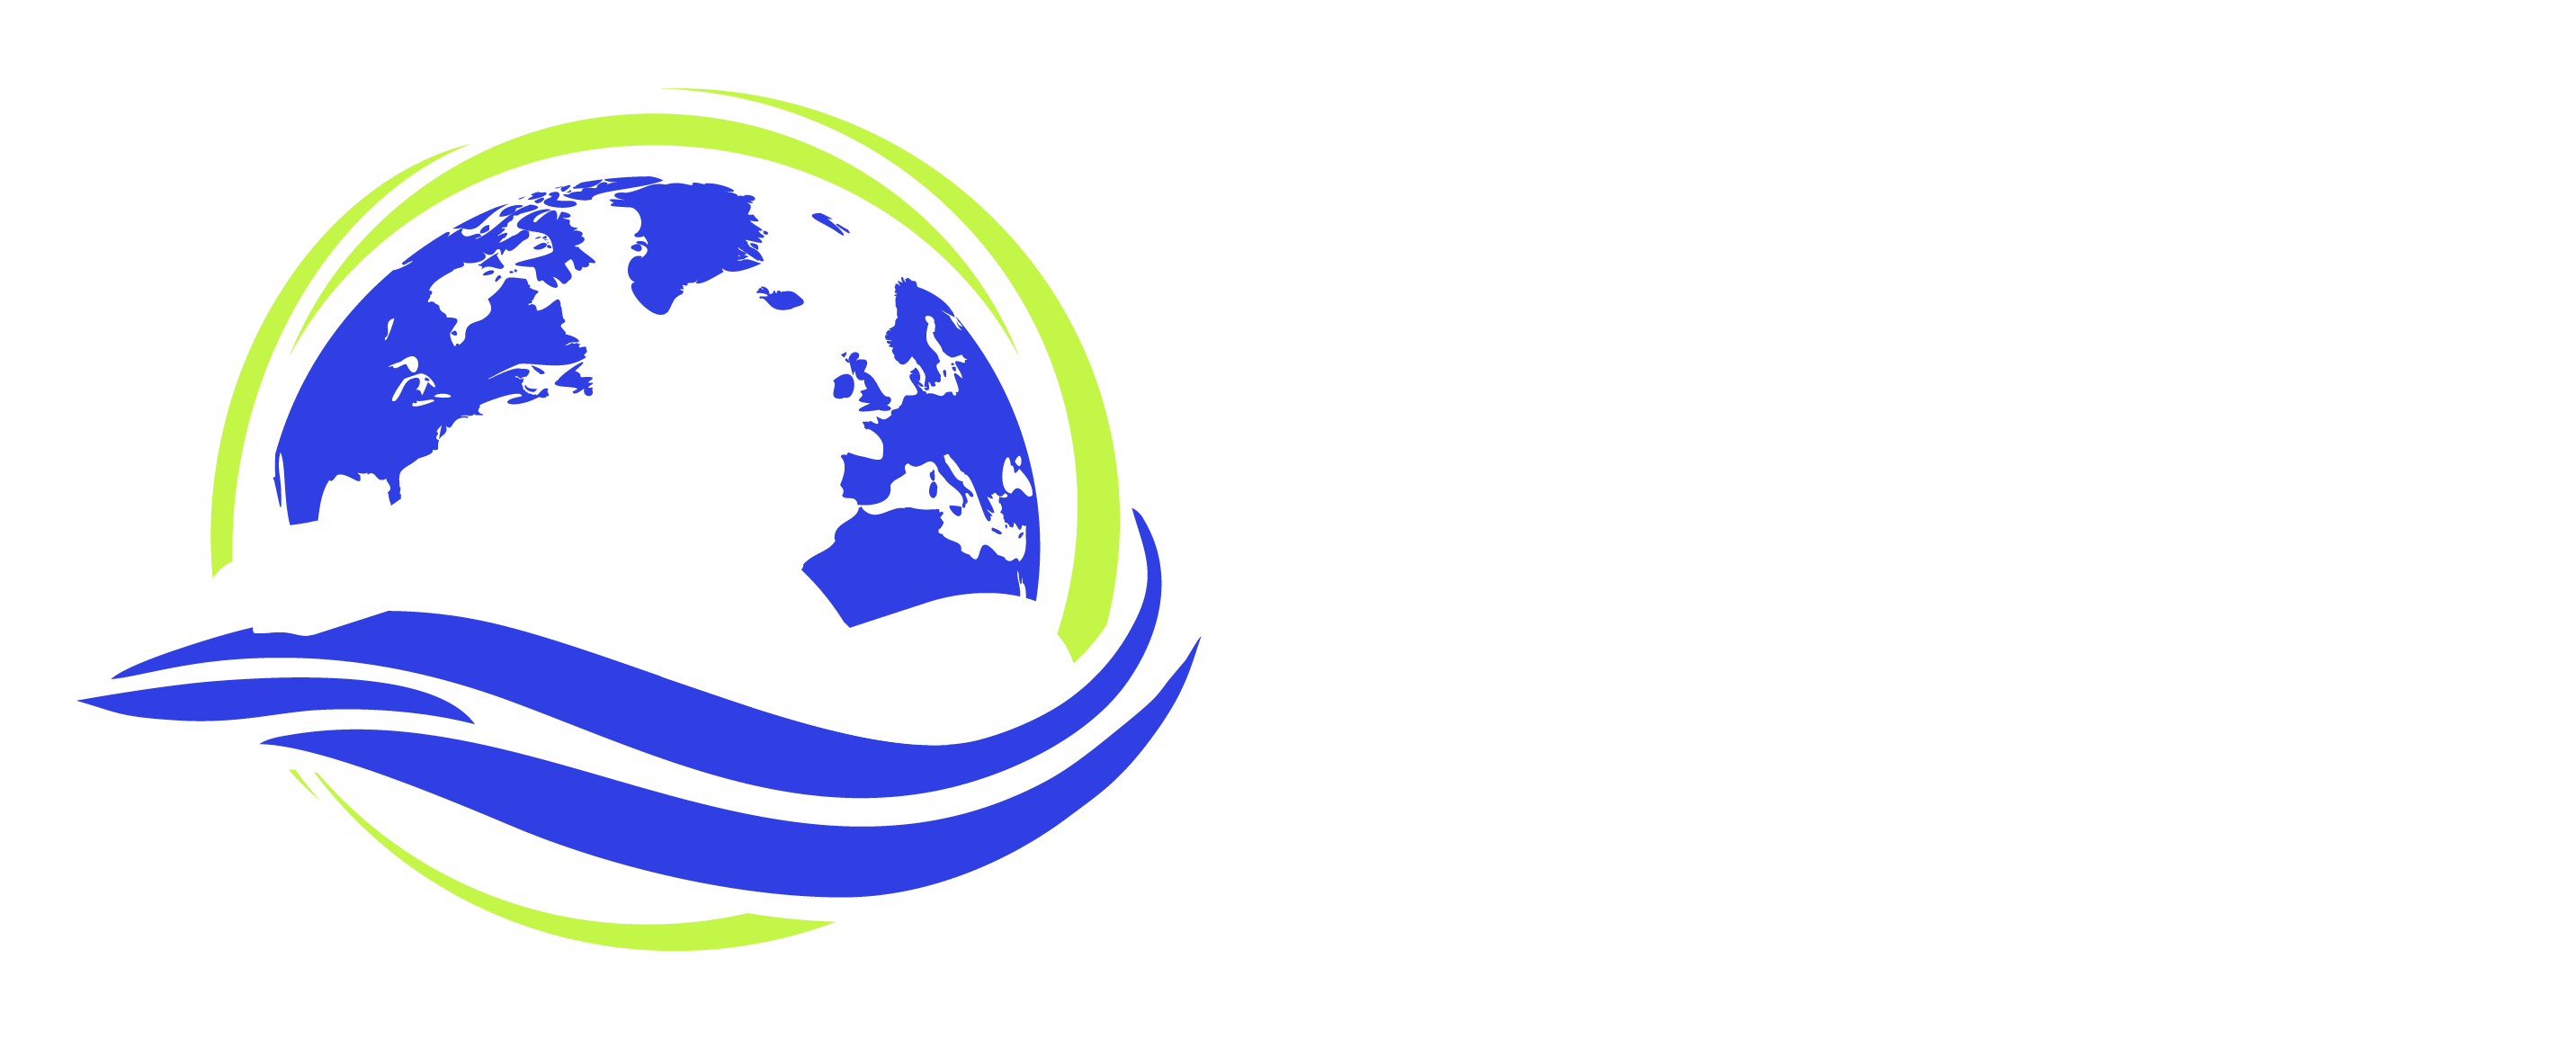 Global Aquatic Championship logo with name